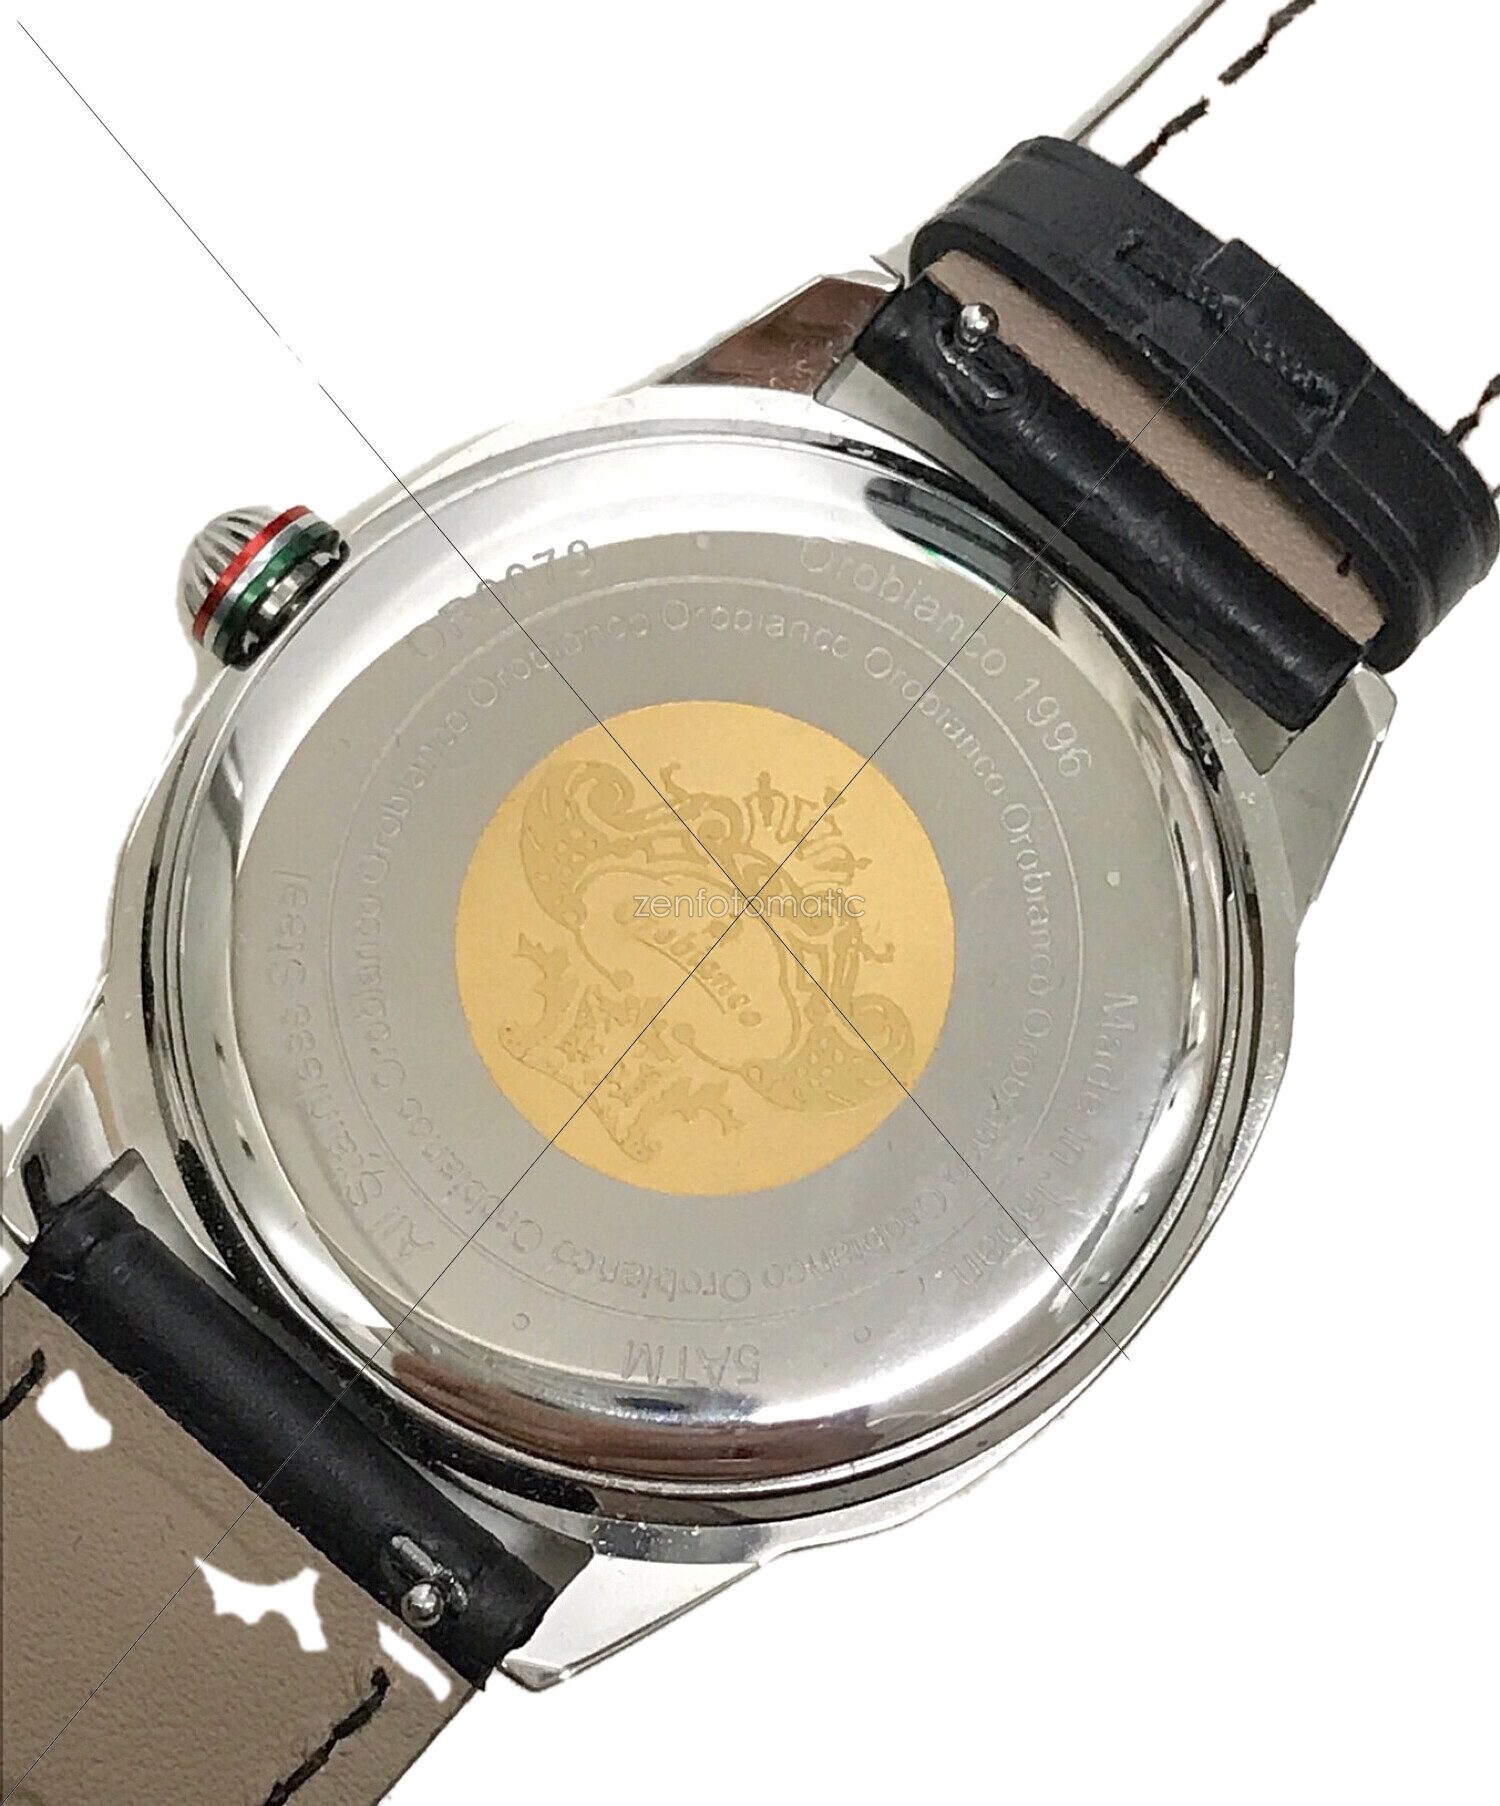 Orobianco (オロビアンコ) 腕時計 サイズ:下記参照